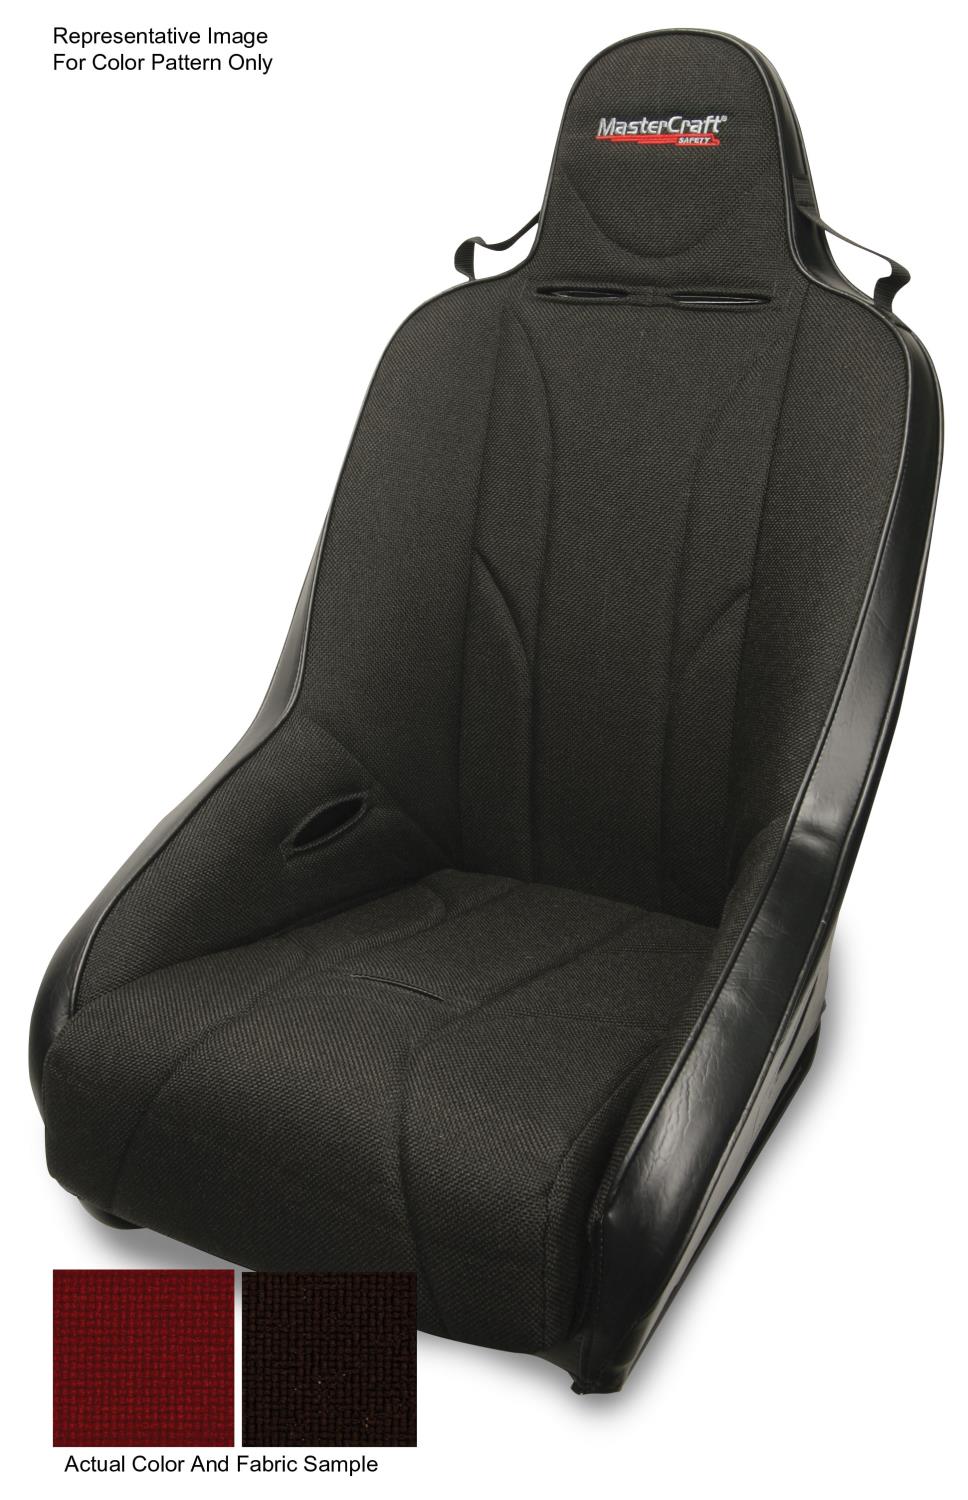 561012 Standard PROSeat w/Fixed Headrest, Black w Black Fabric Removable Cushion, Red Side Panels, Black Band w/BRS Stitch